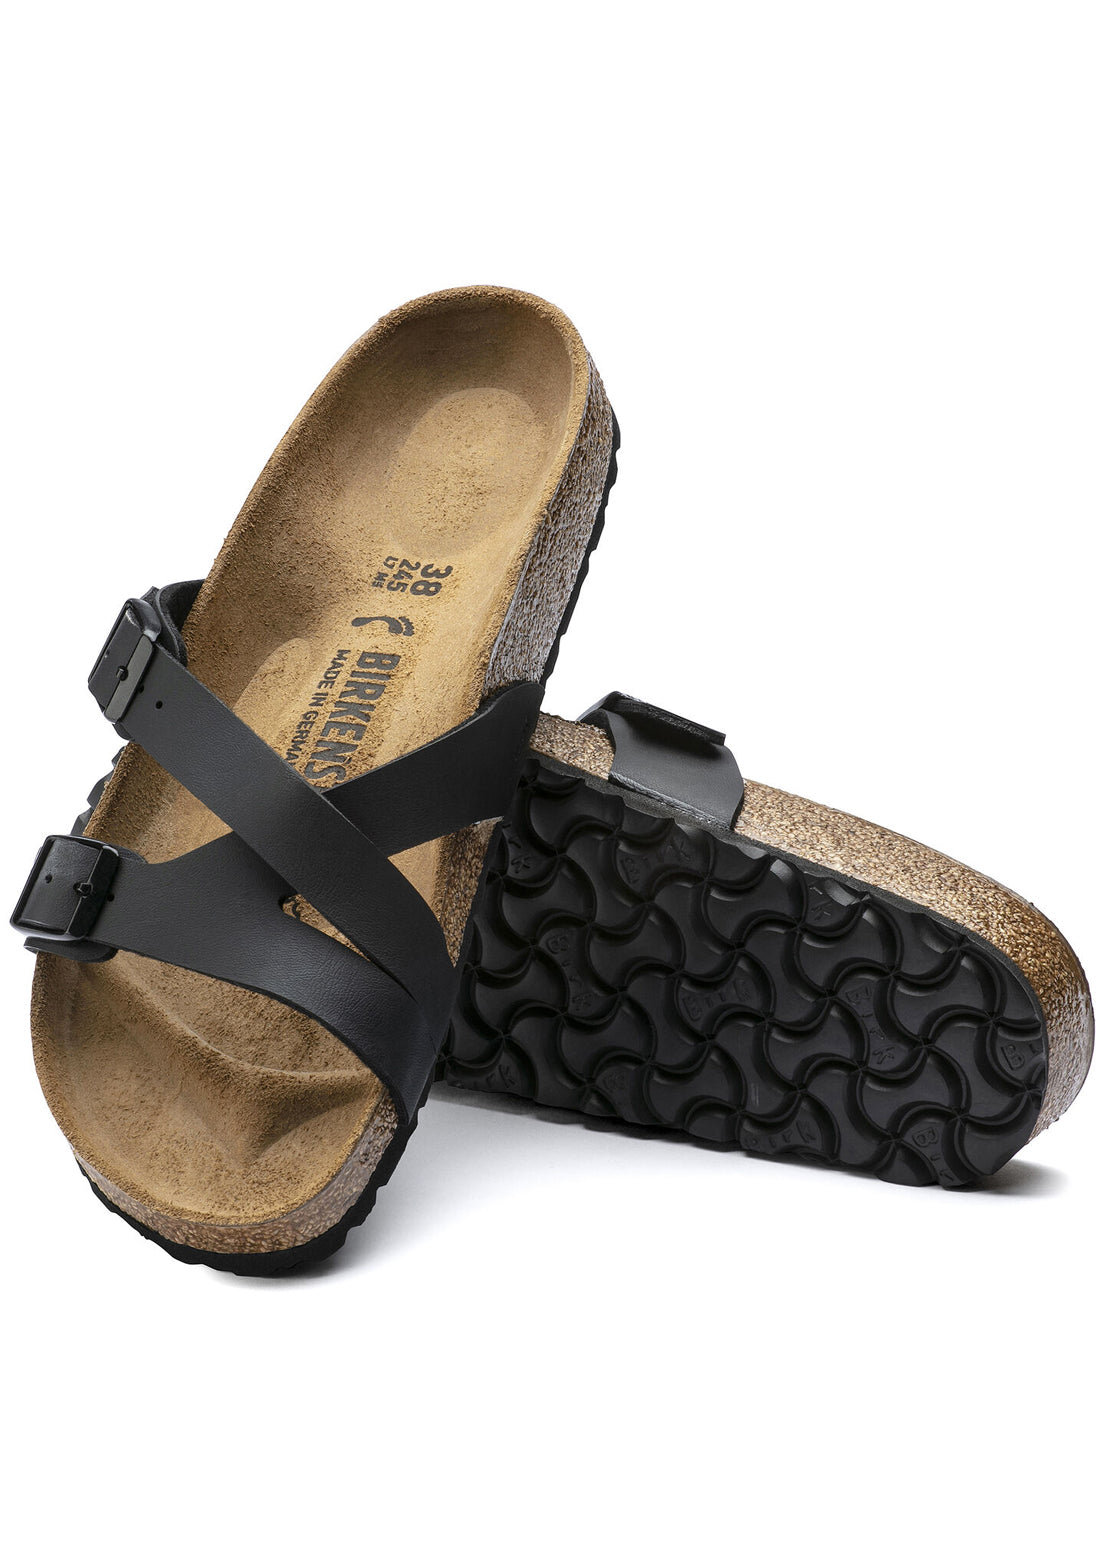 Birkenstock Women’s Yao Balance Birko-Flor Regular Sandals Black